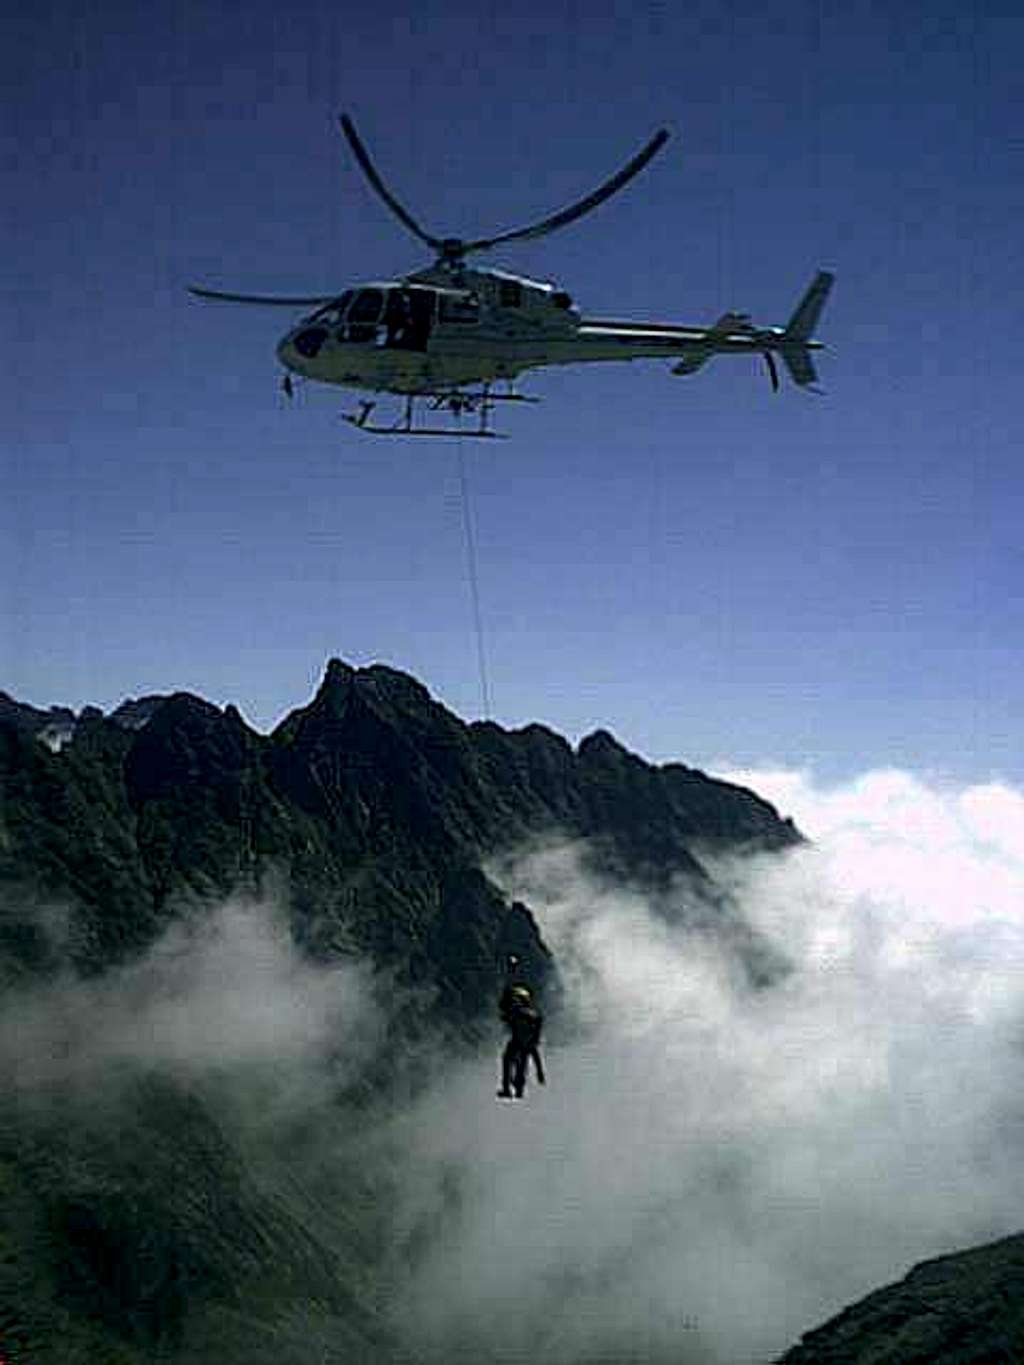 Tatras mountain rescue team in action